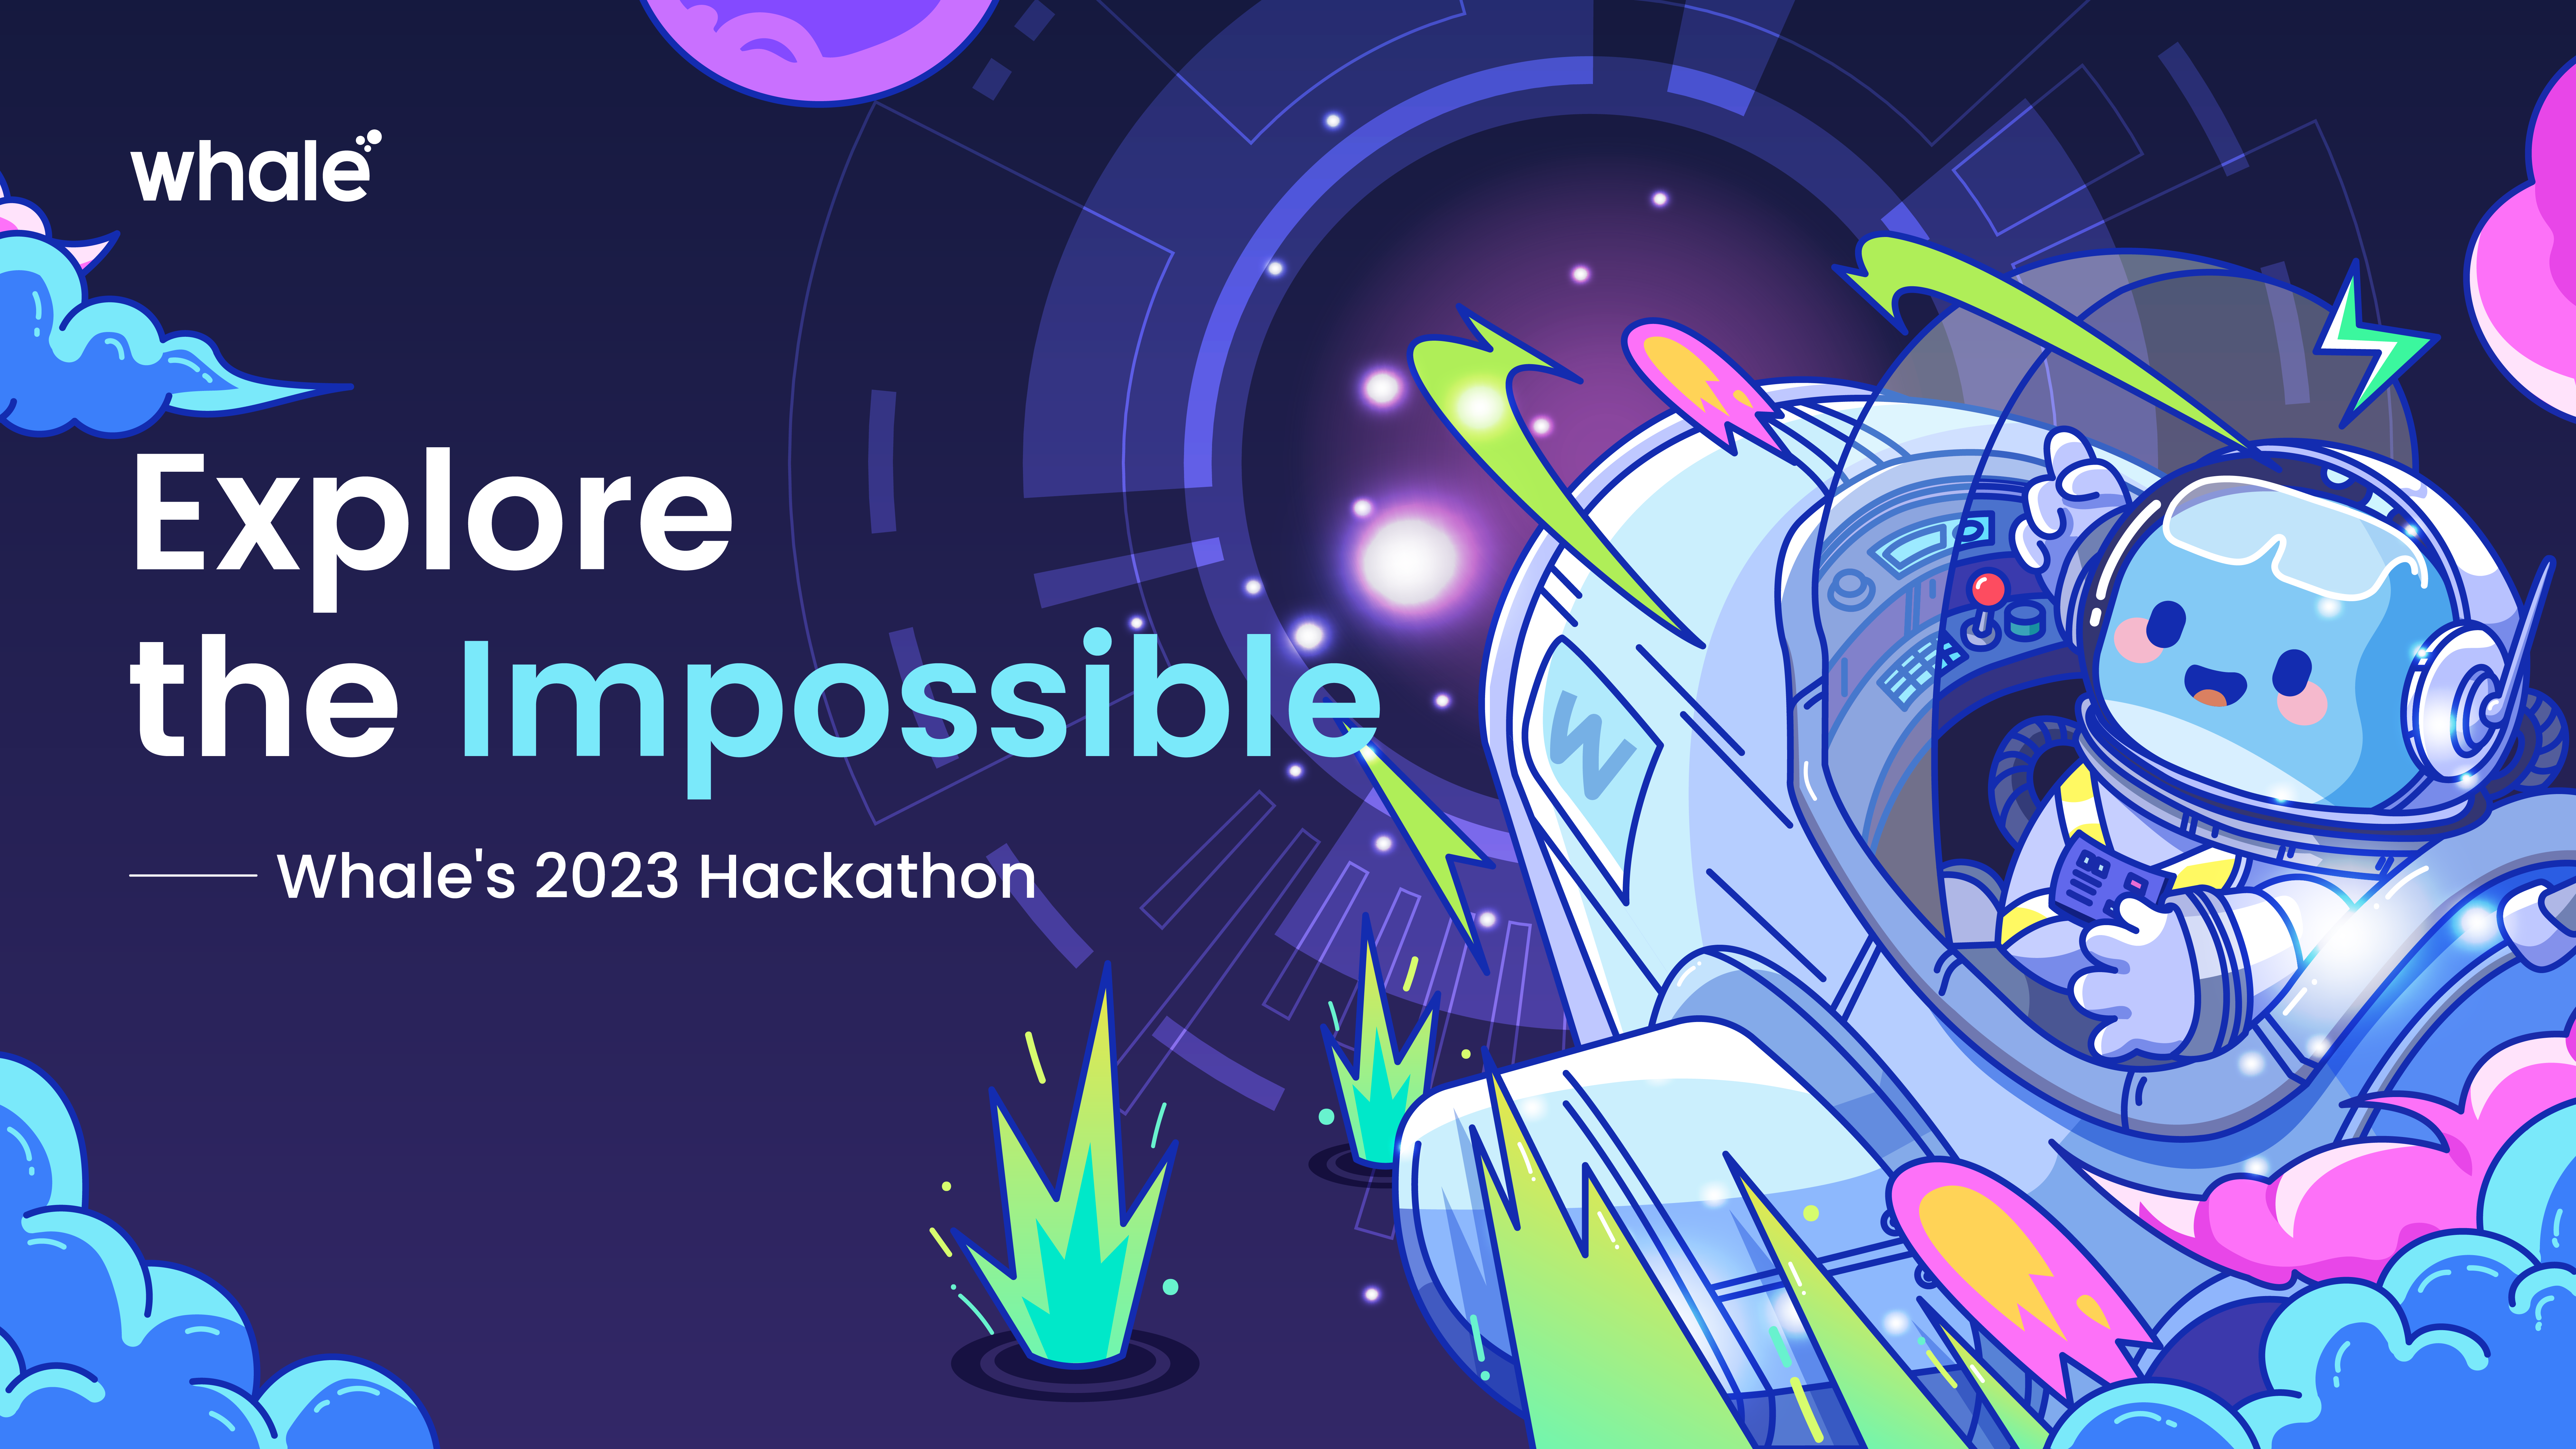 2023 Hackathon is Inspiring Groundbreaking Innovation